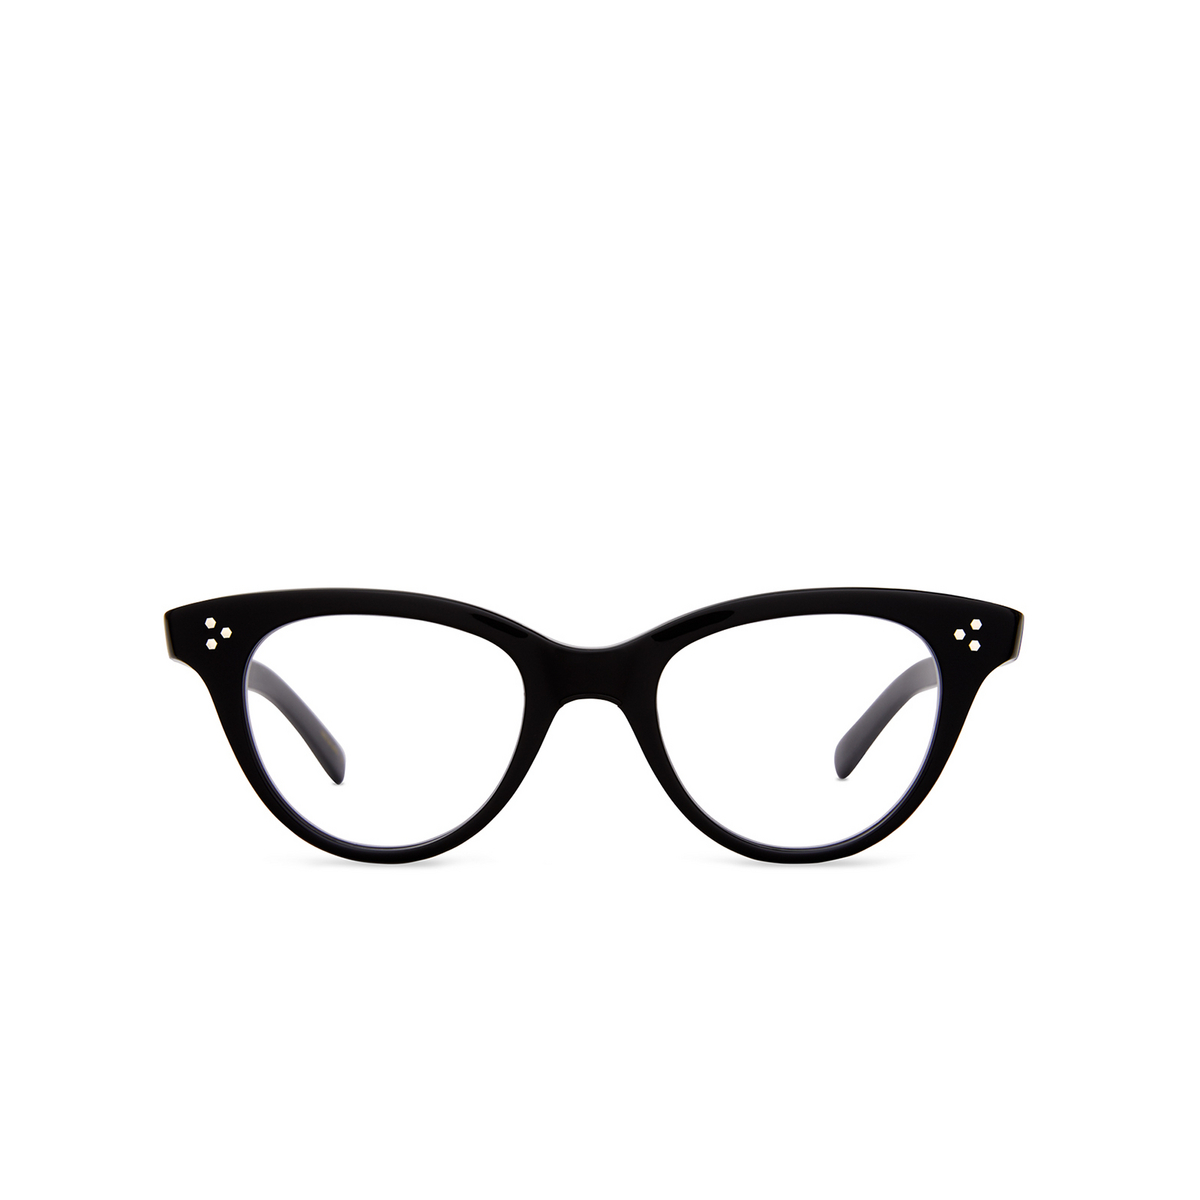 Mr. Leight KATHRYN C Eyeglasses BK-PLT Black-Platinum - front view